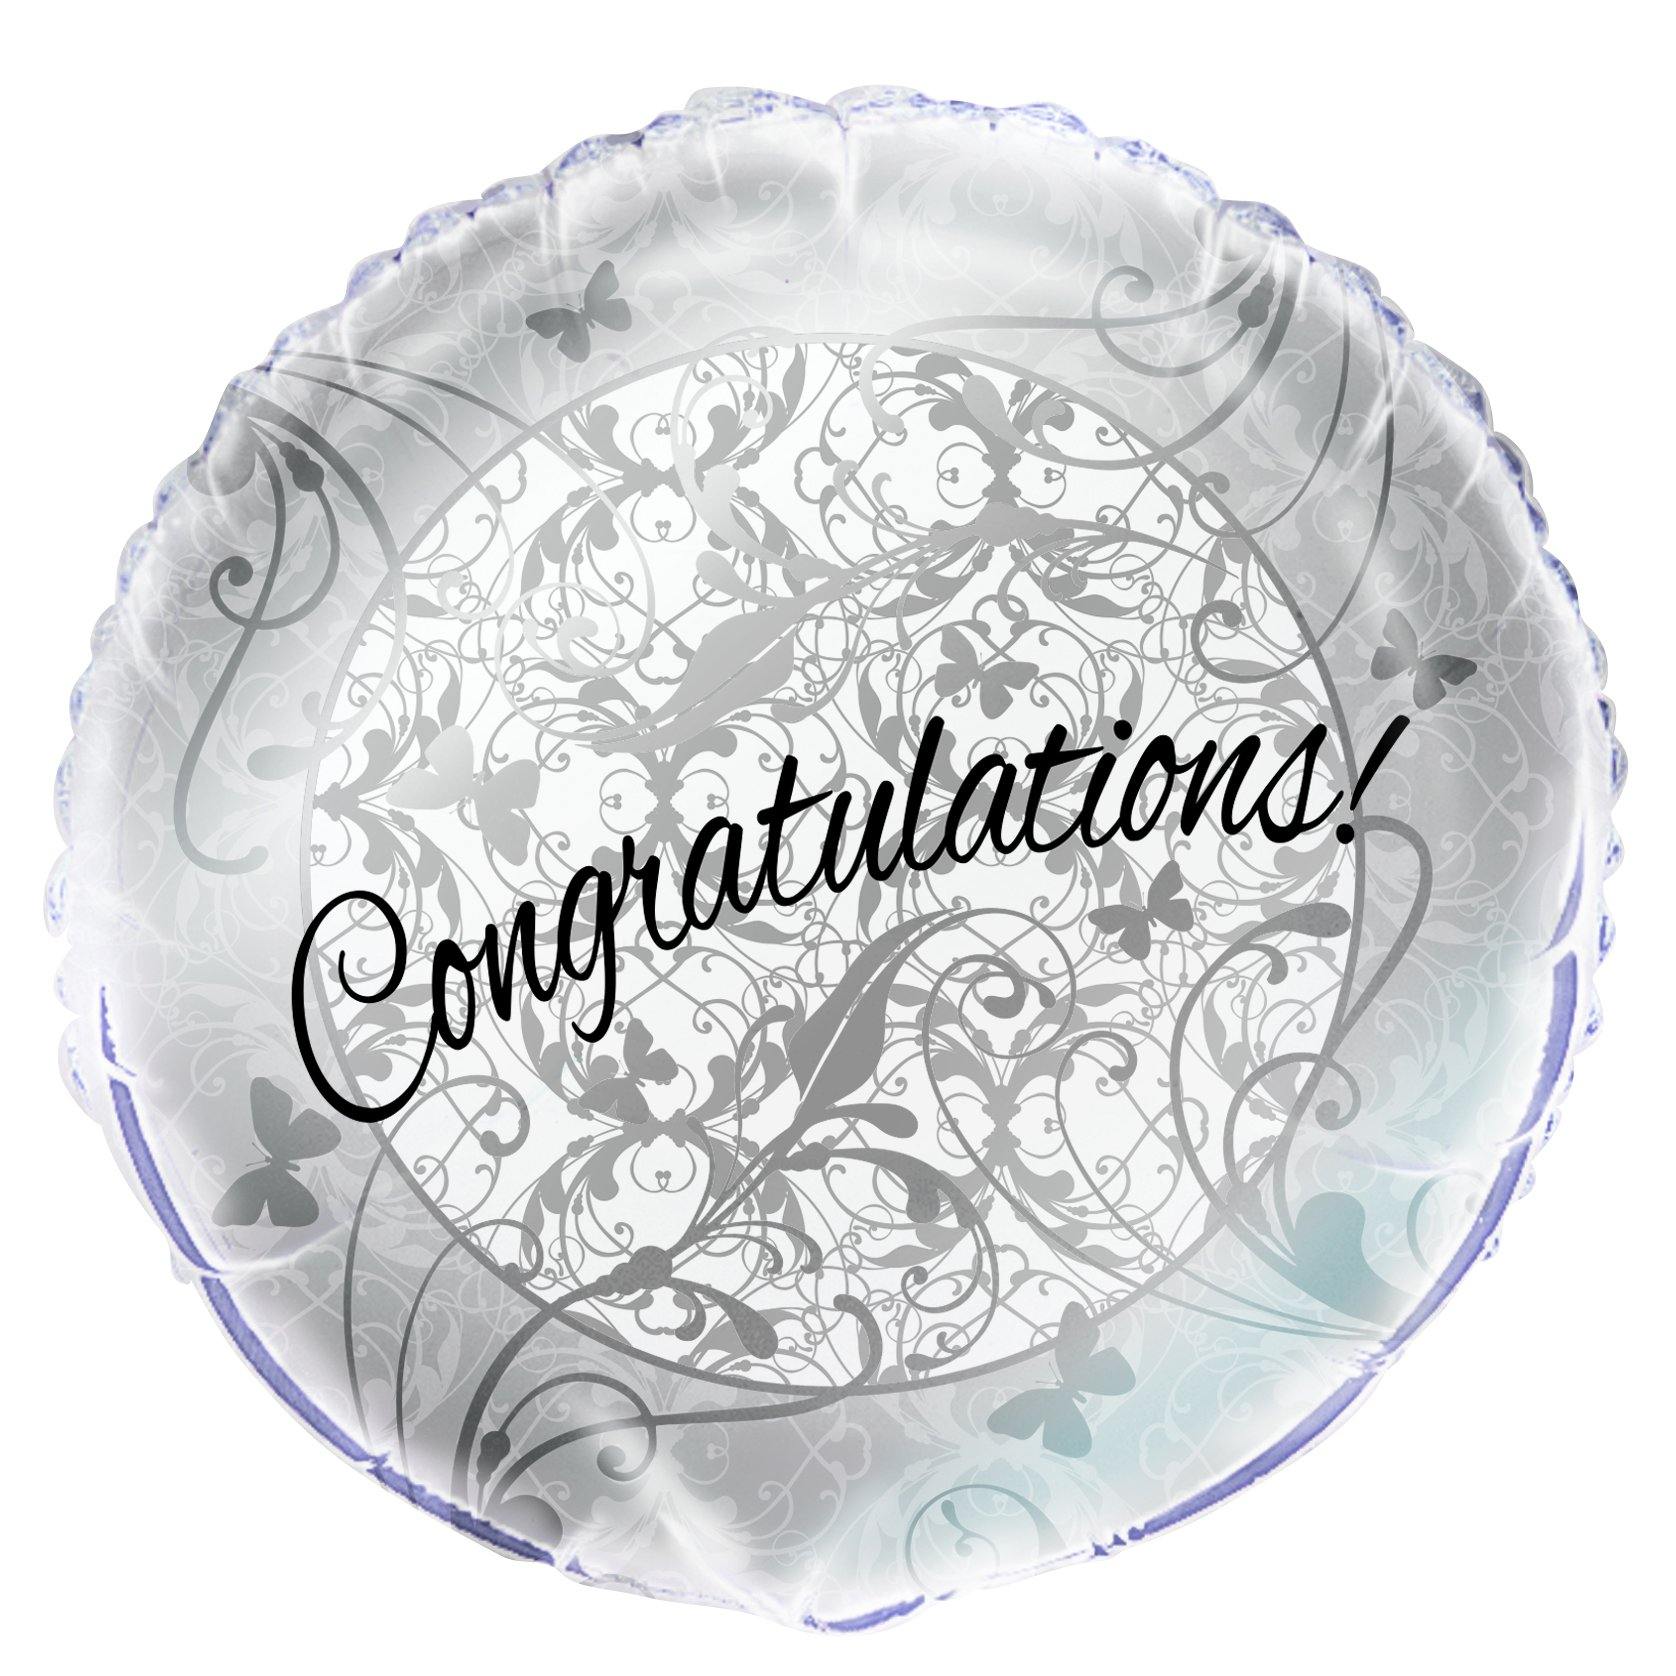 Congratulations Victorian Wedding Round Foil Balloon - 45cm - The Base Warehouse